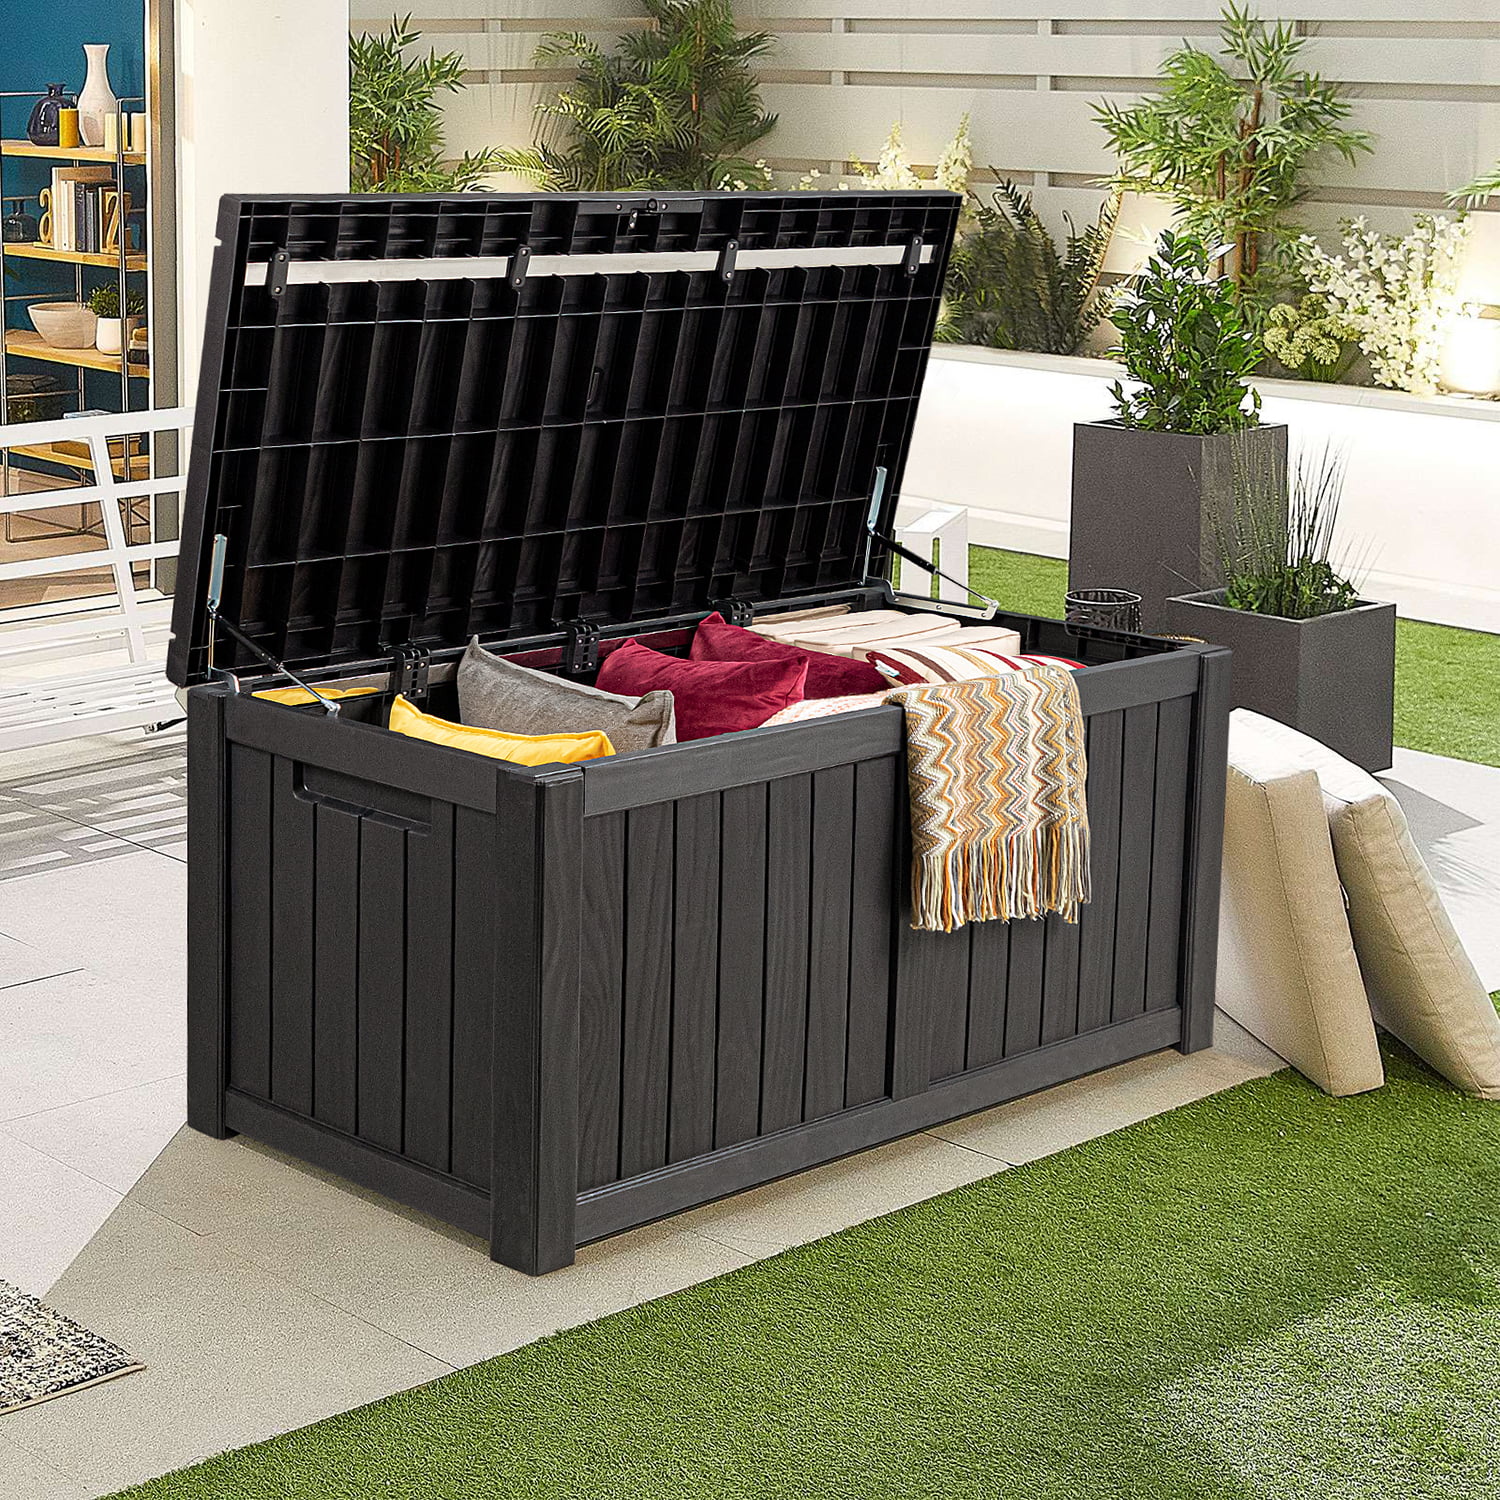 Patio Garden Deck Box With Handles SUNCROWN Weather Resistant Resin Outdoor Storage Container Black 